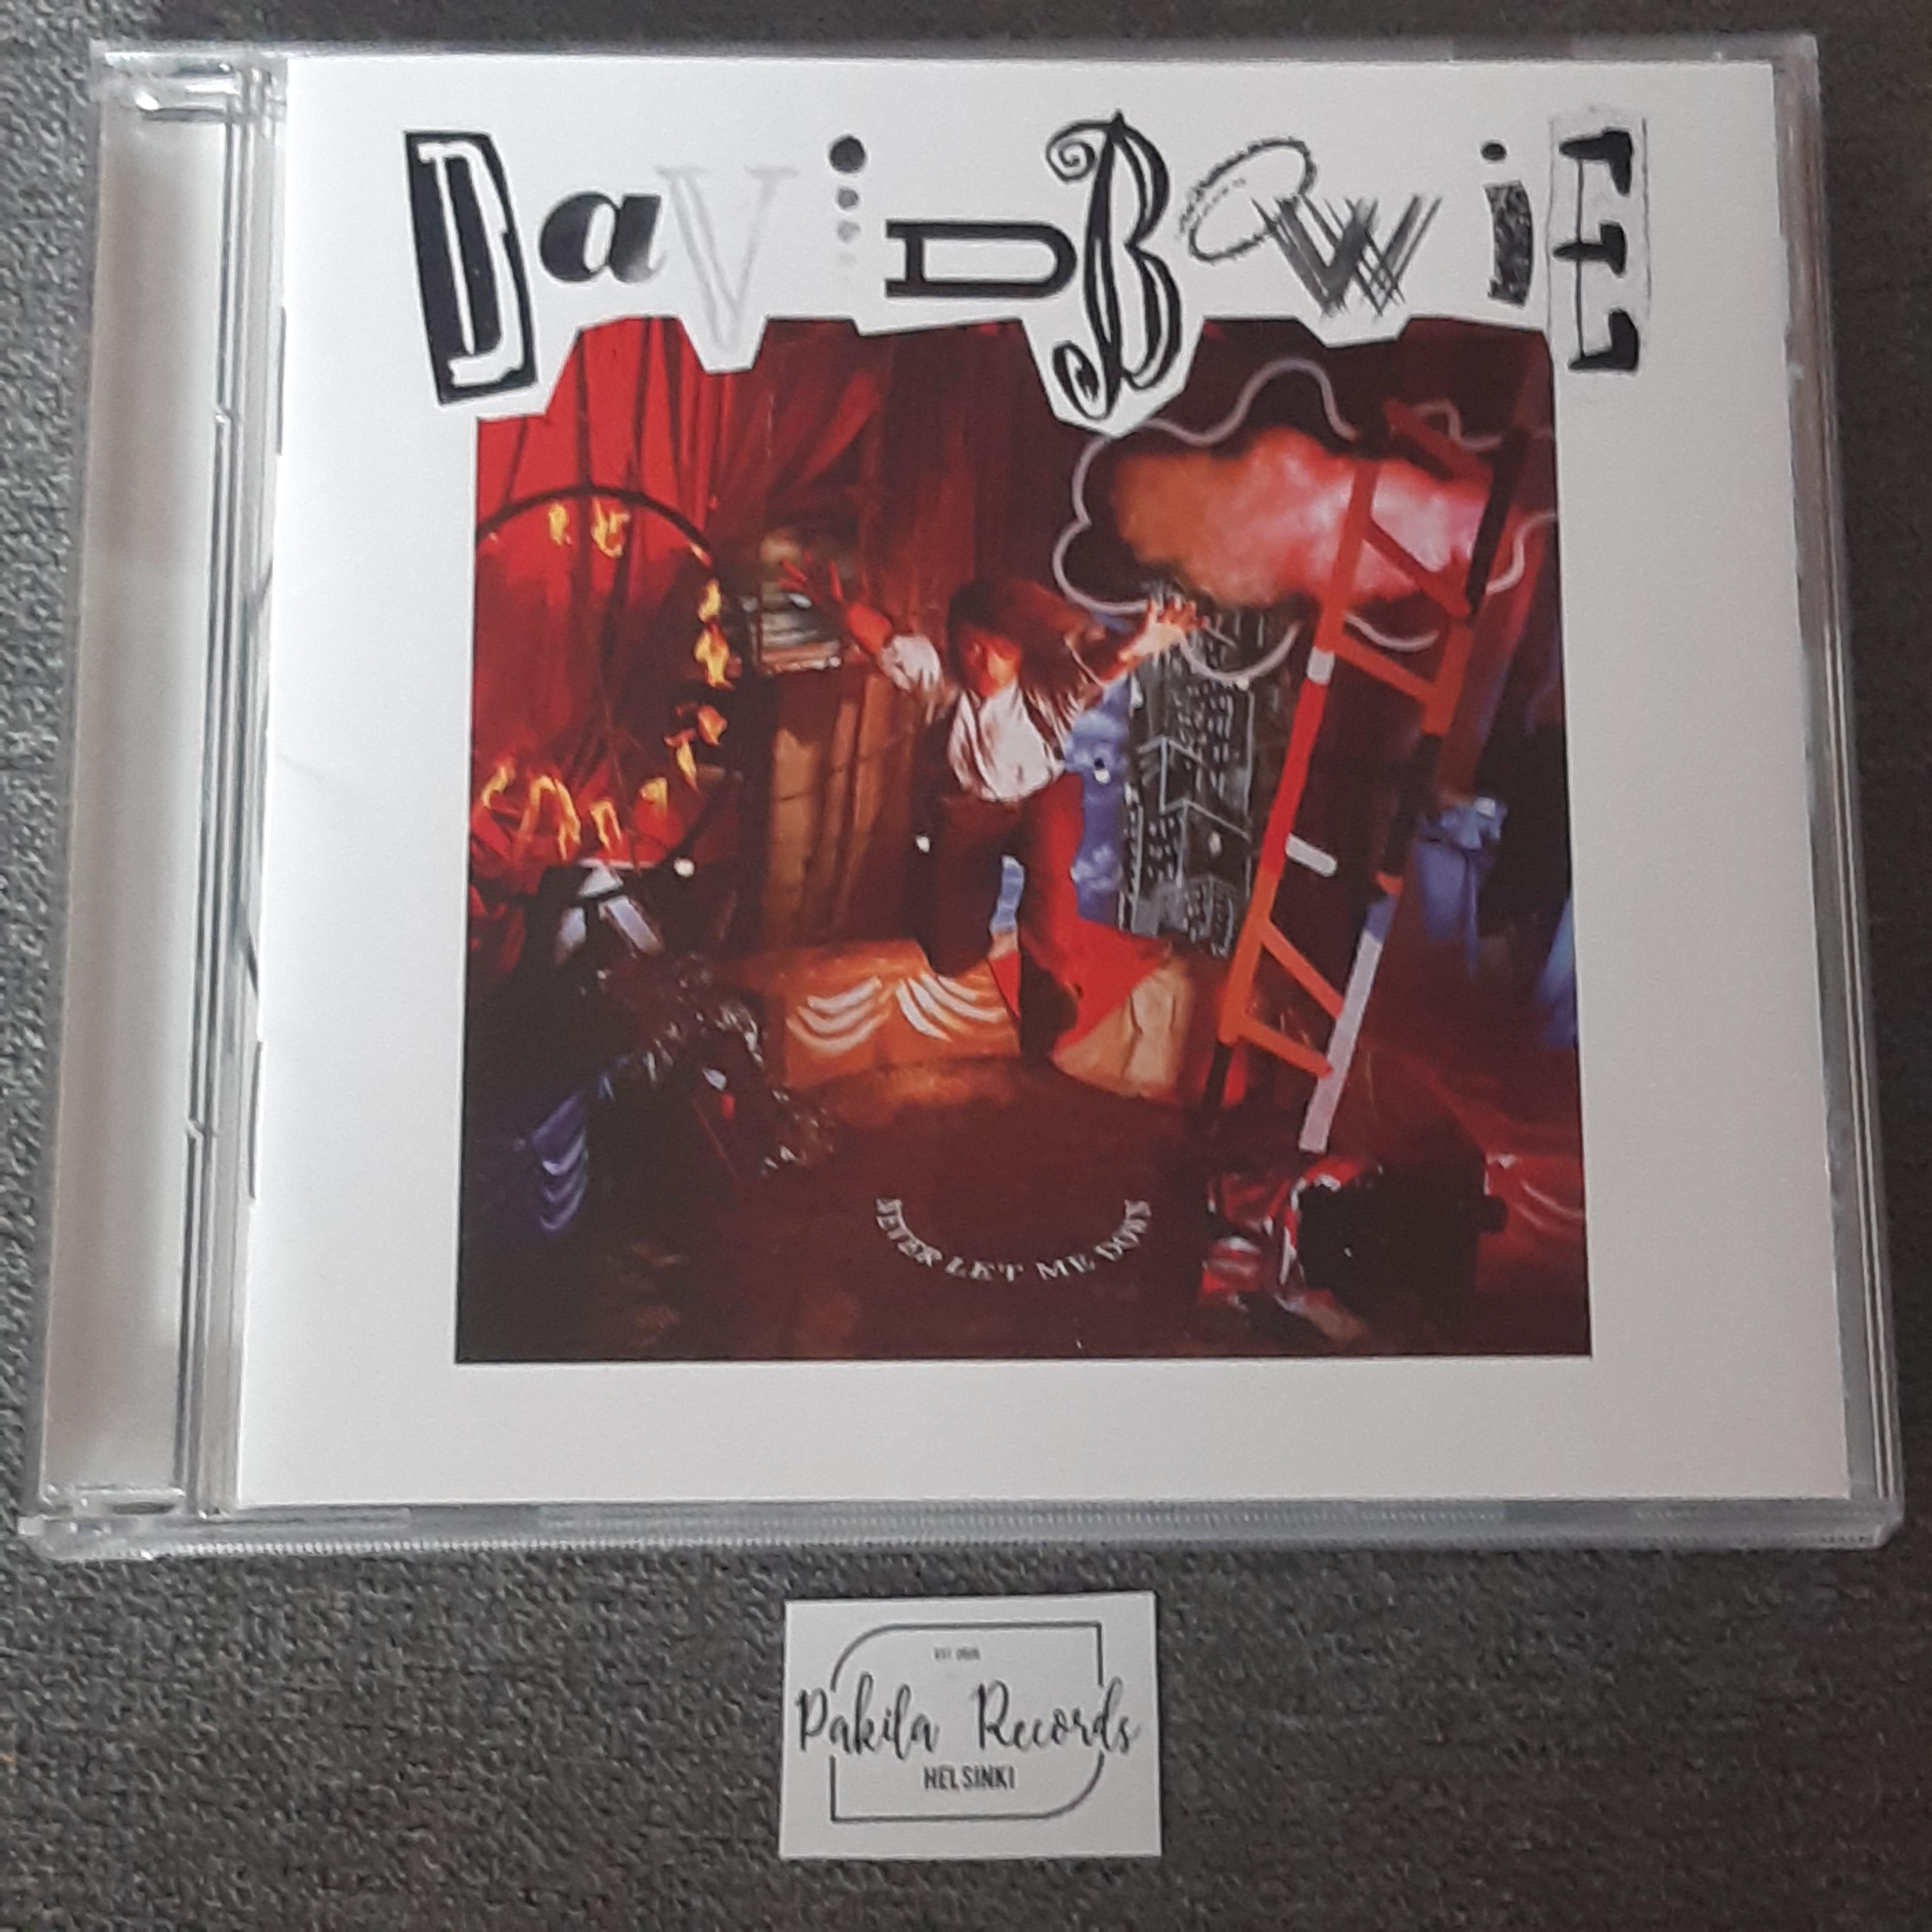 David Bowie - Never Let Me Down - CD (käytetty)